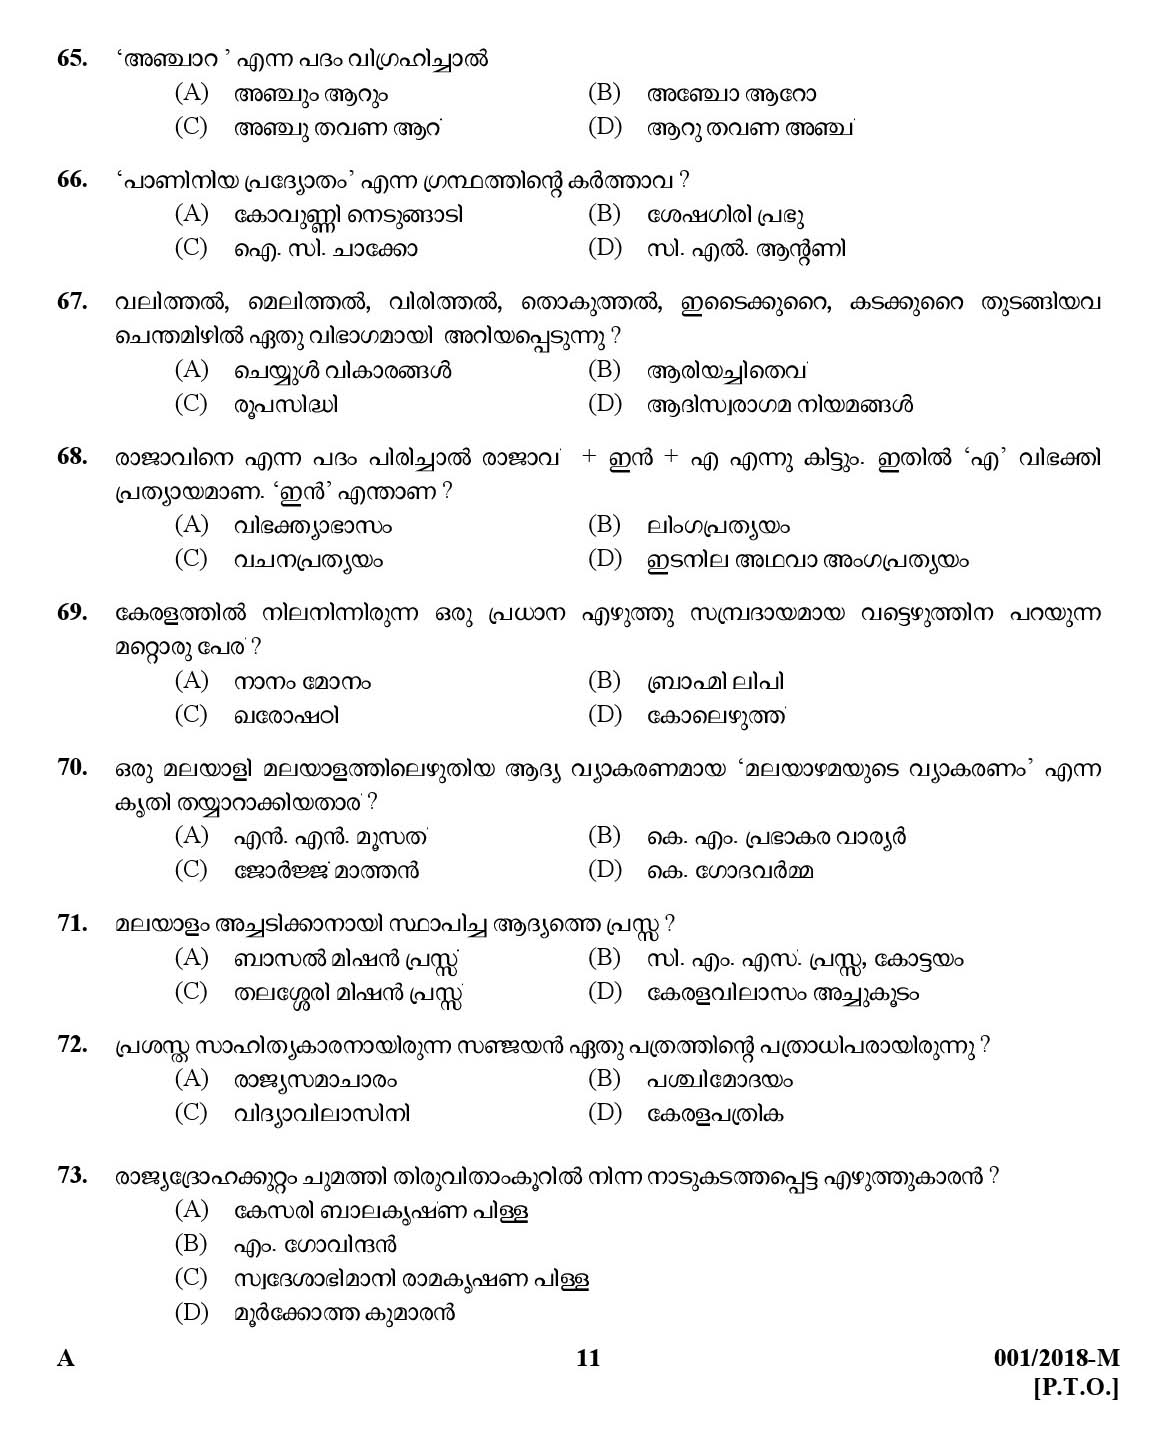 Kerala PSC High School Assistant Malayalam Question Code 0012018 M 10